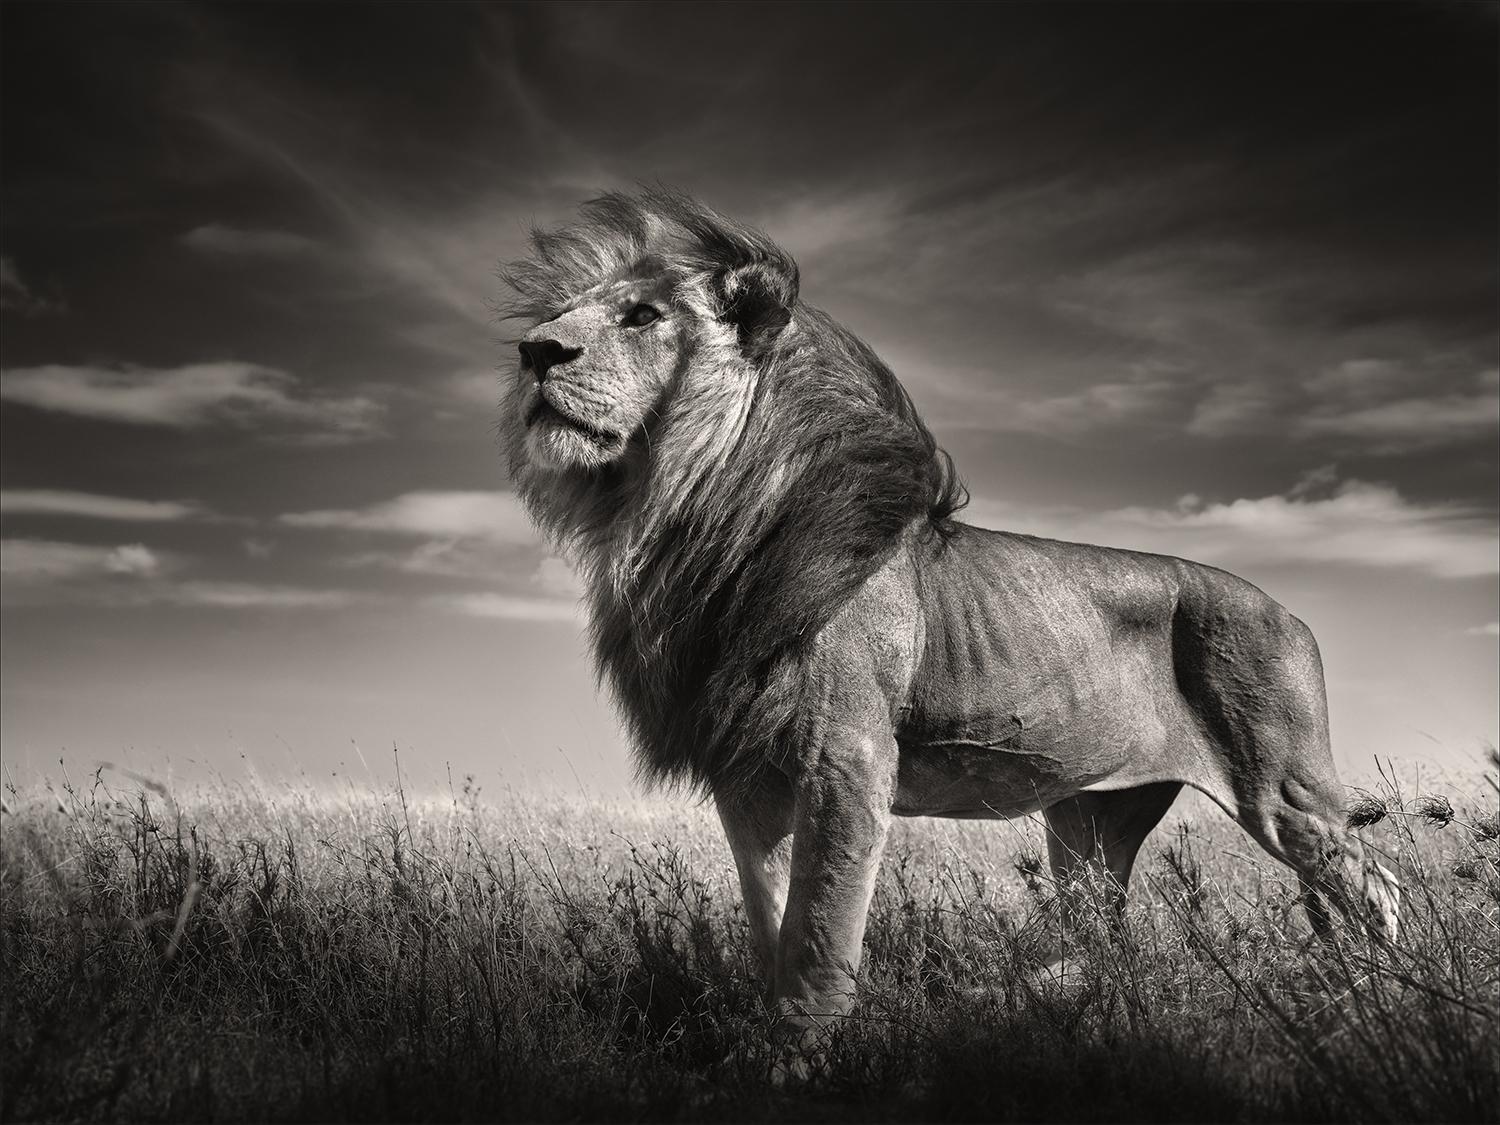 Joachim Schmeisser Portrait Photograph - Just Me, animal, wildlife, black and white photography, lion